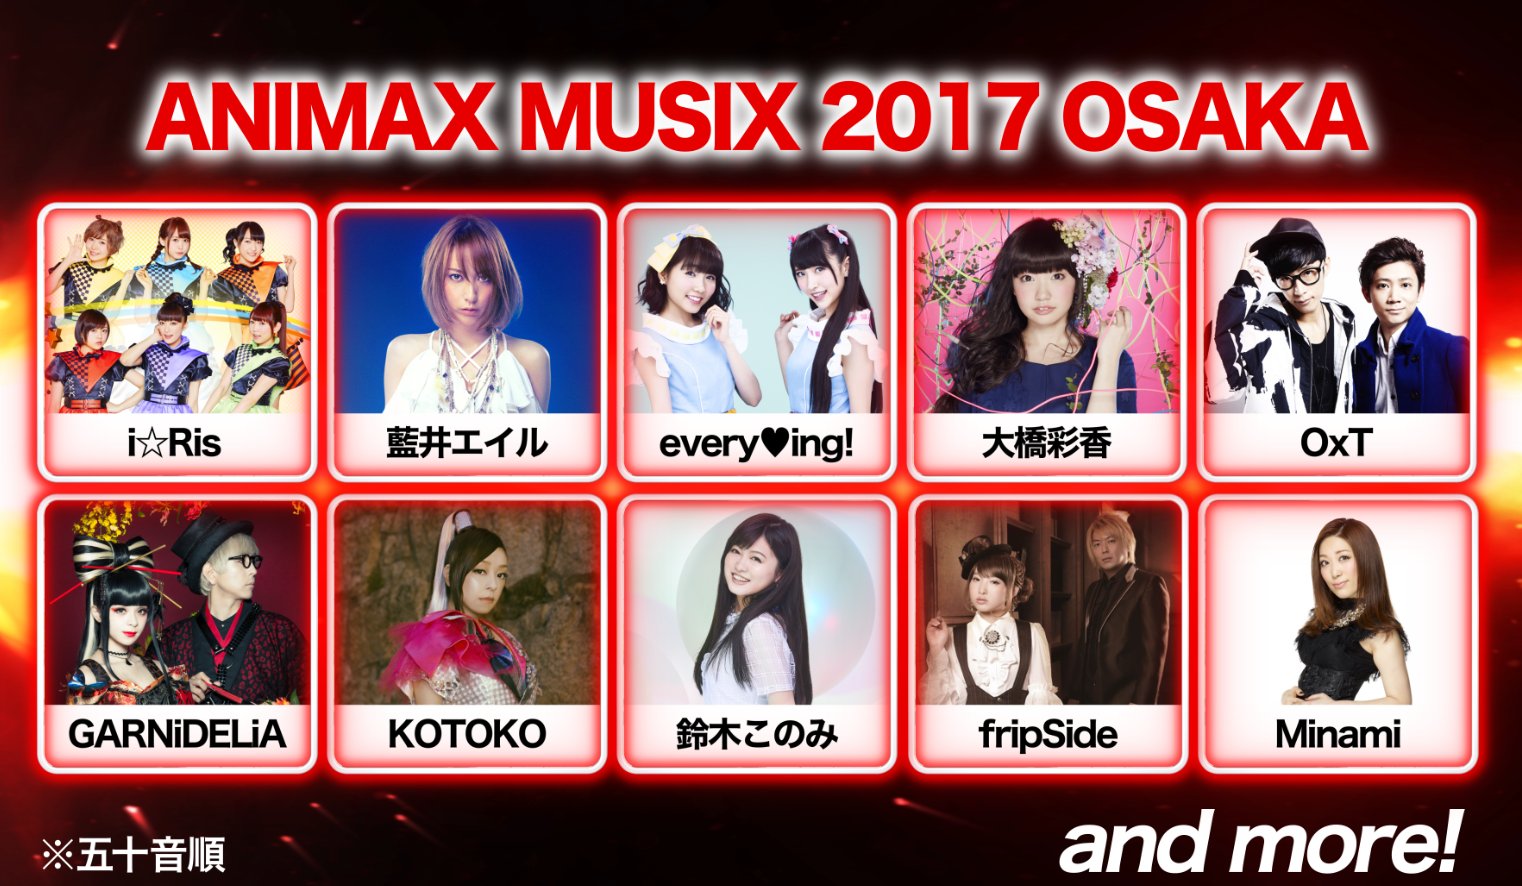 Animax Musix 16年11月23日 Yokohama 17年1月14日 Osaka Canta Per Me Net Forums